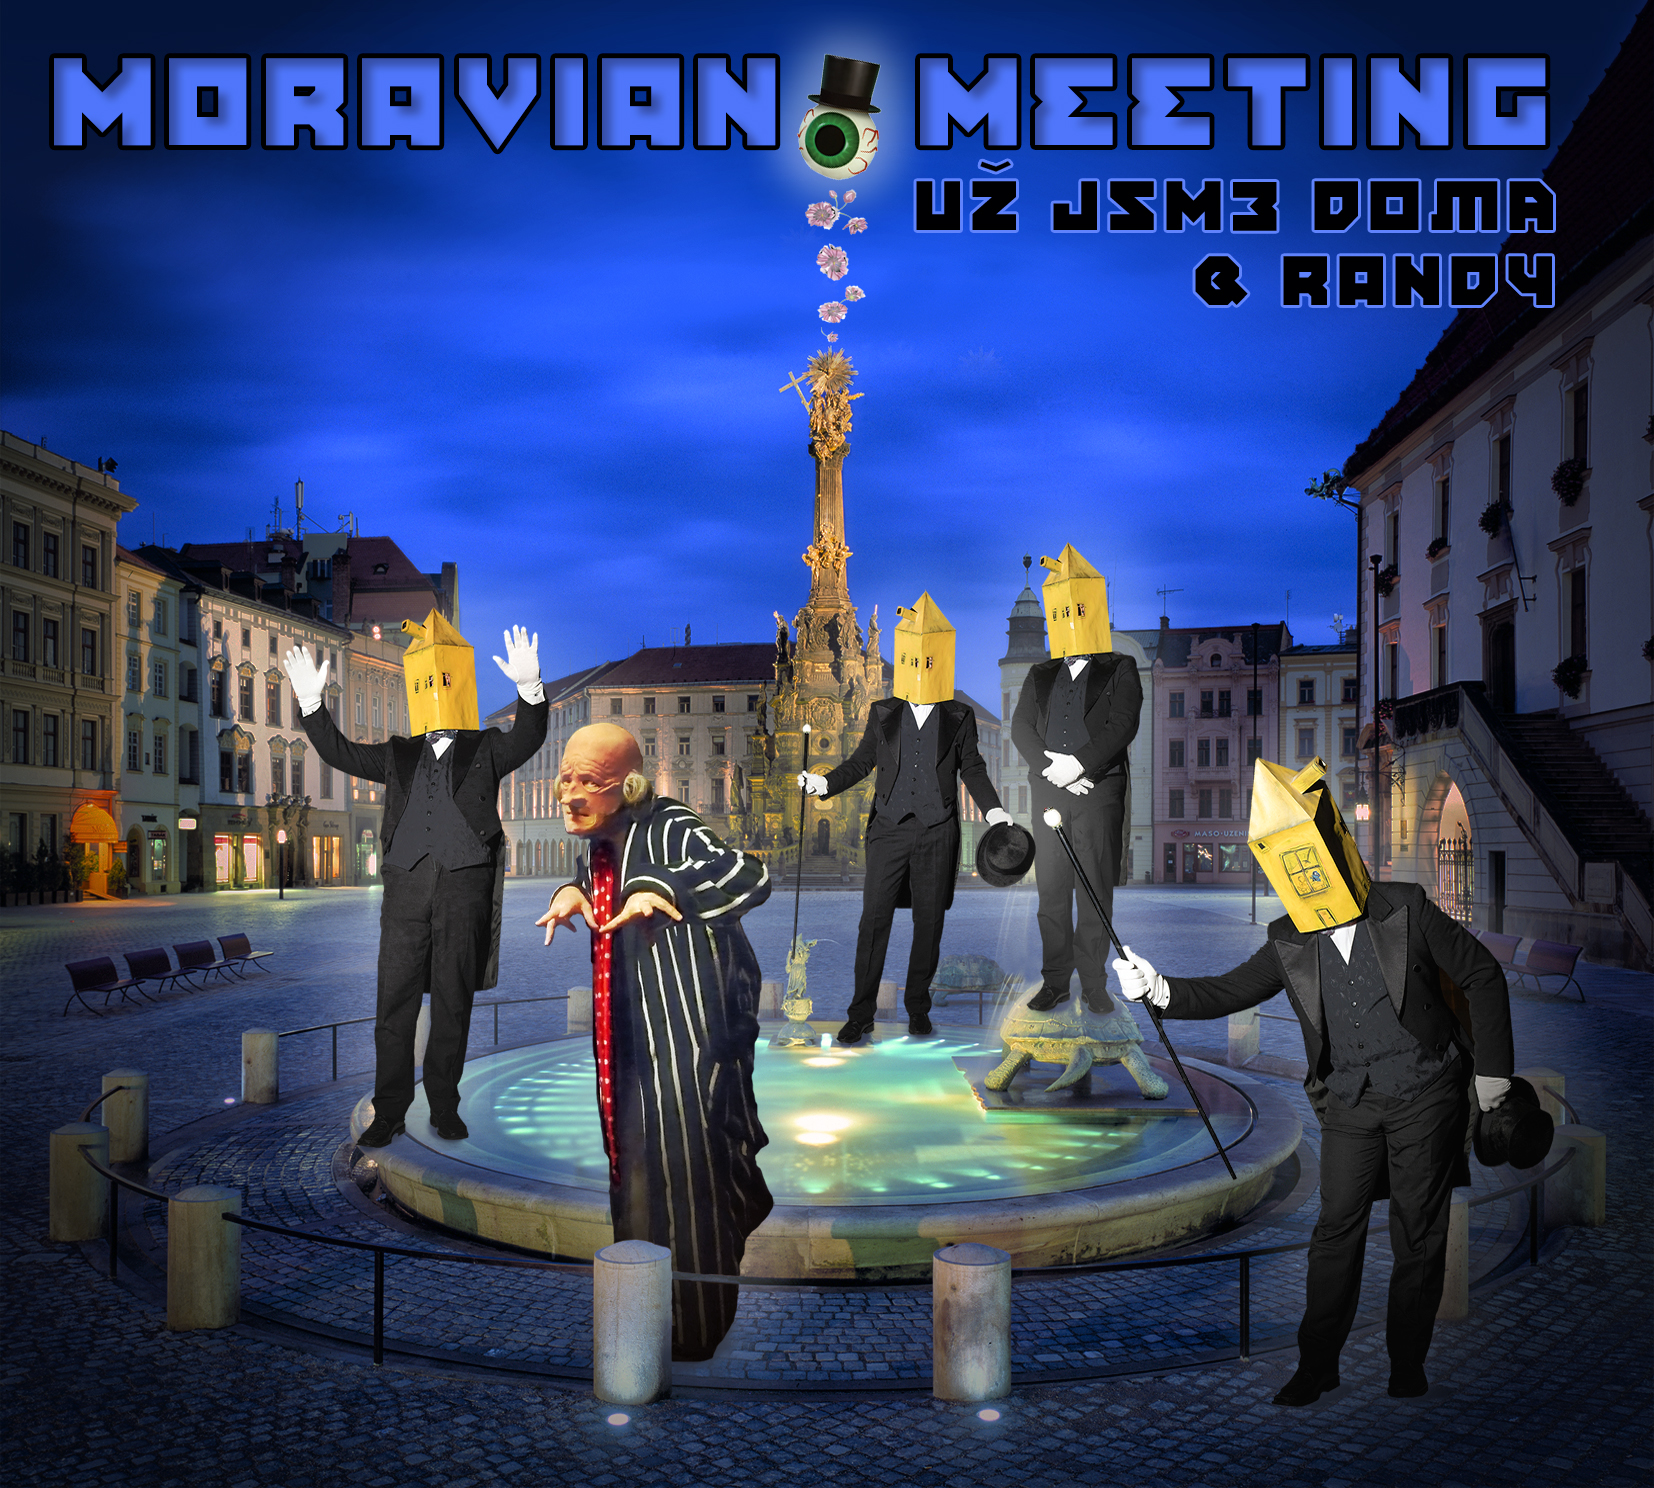 Už jsme doma & Randy - Moravian Meeting